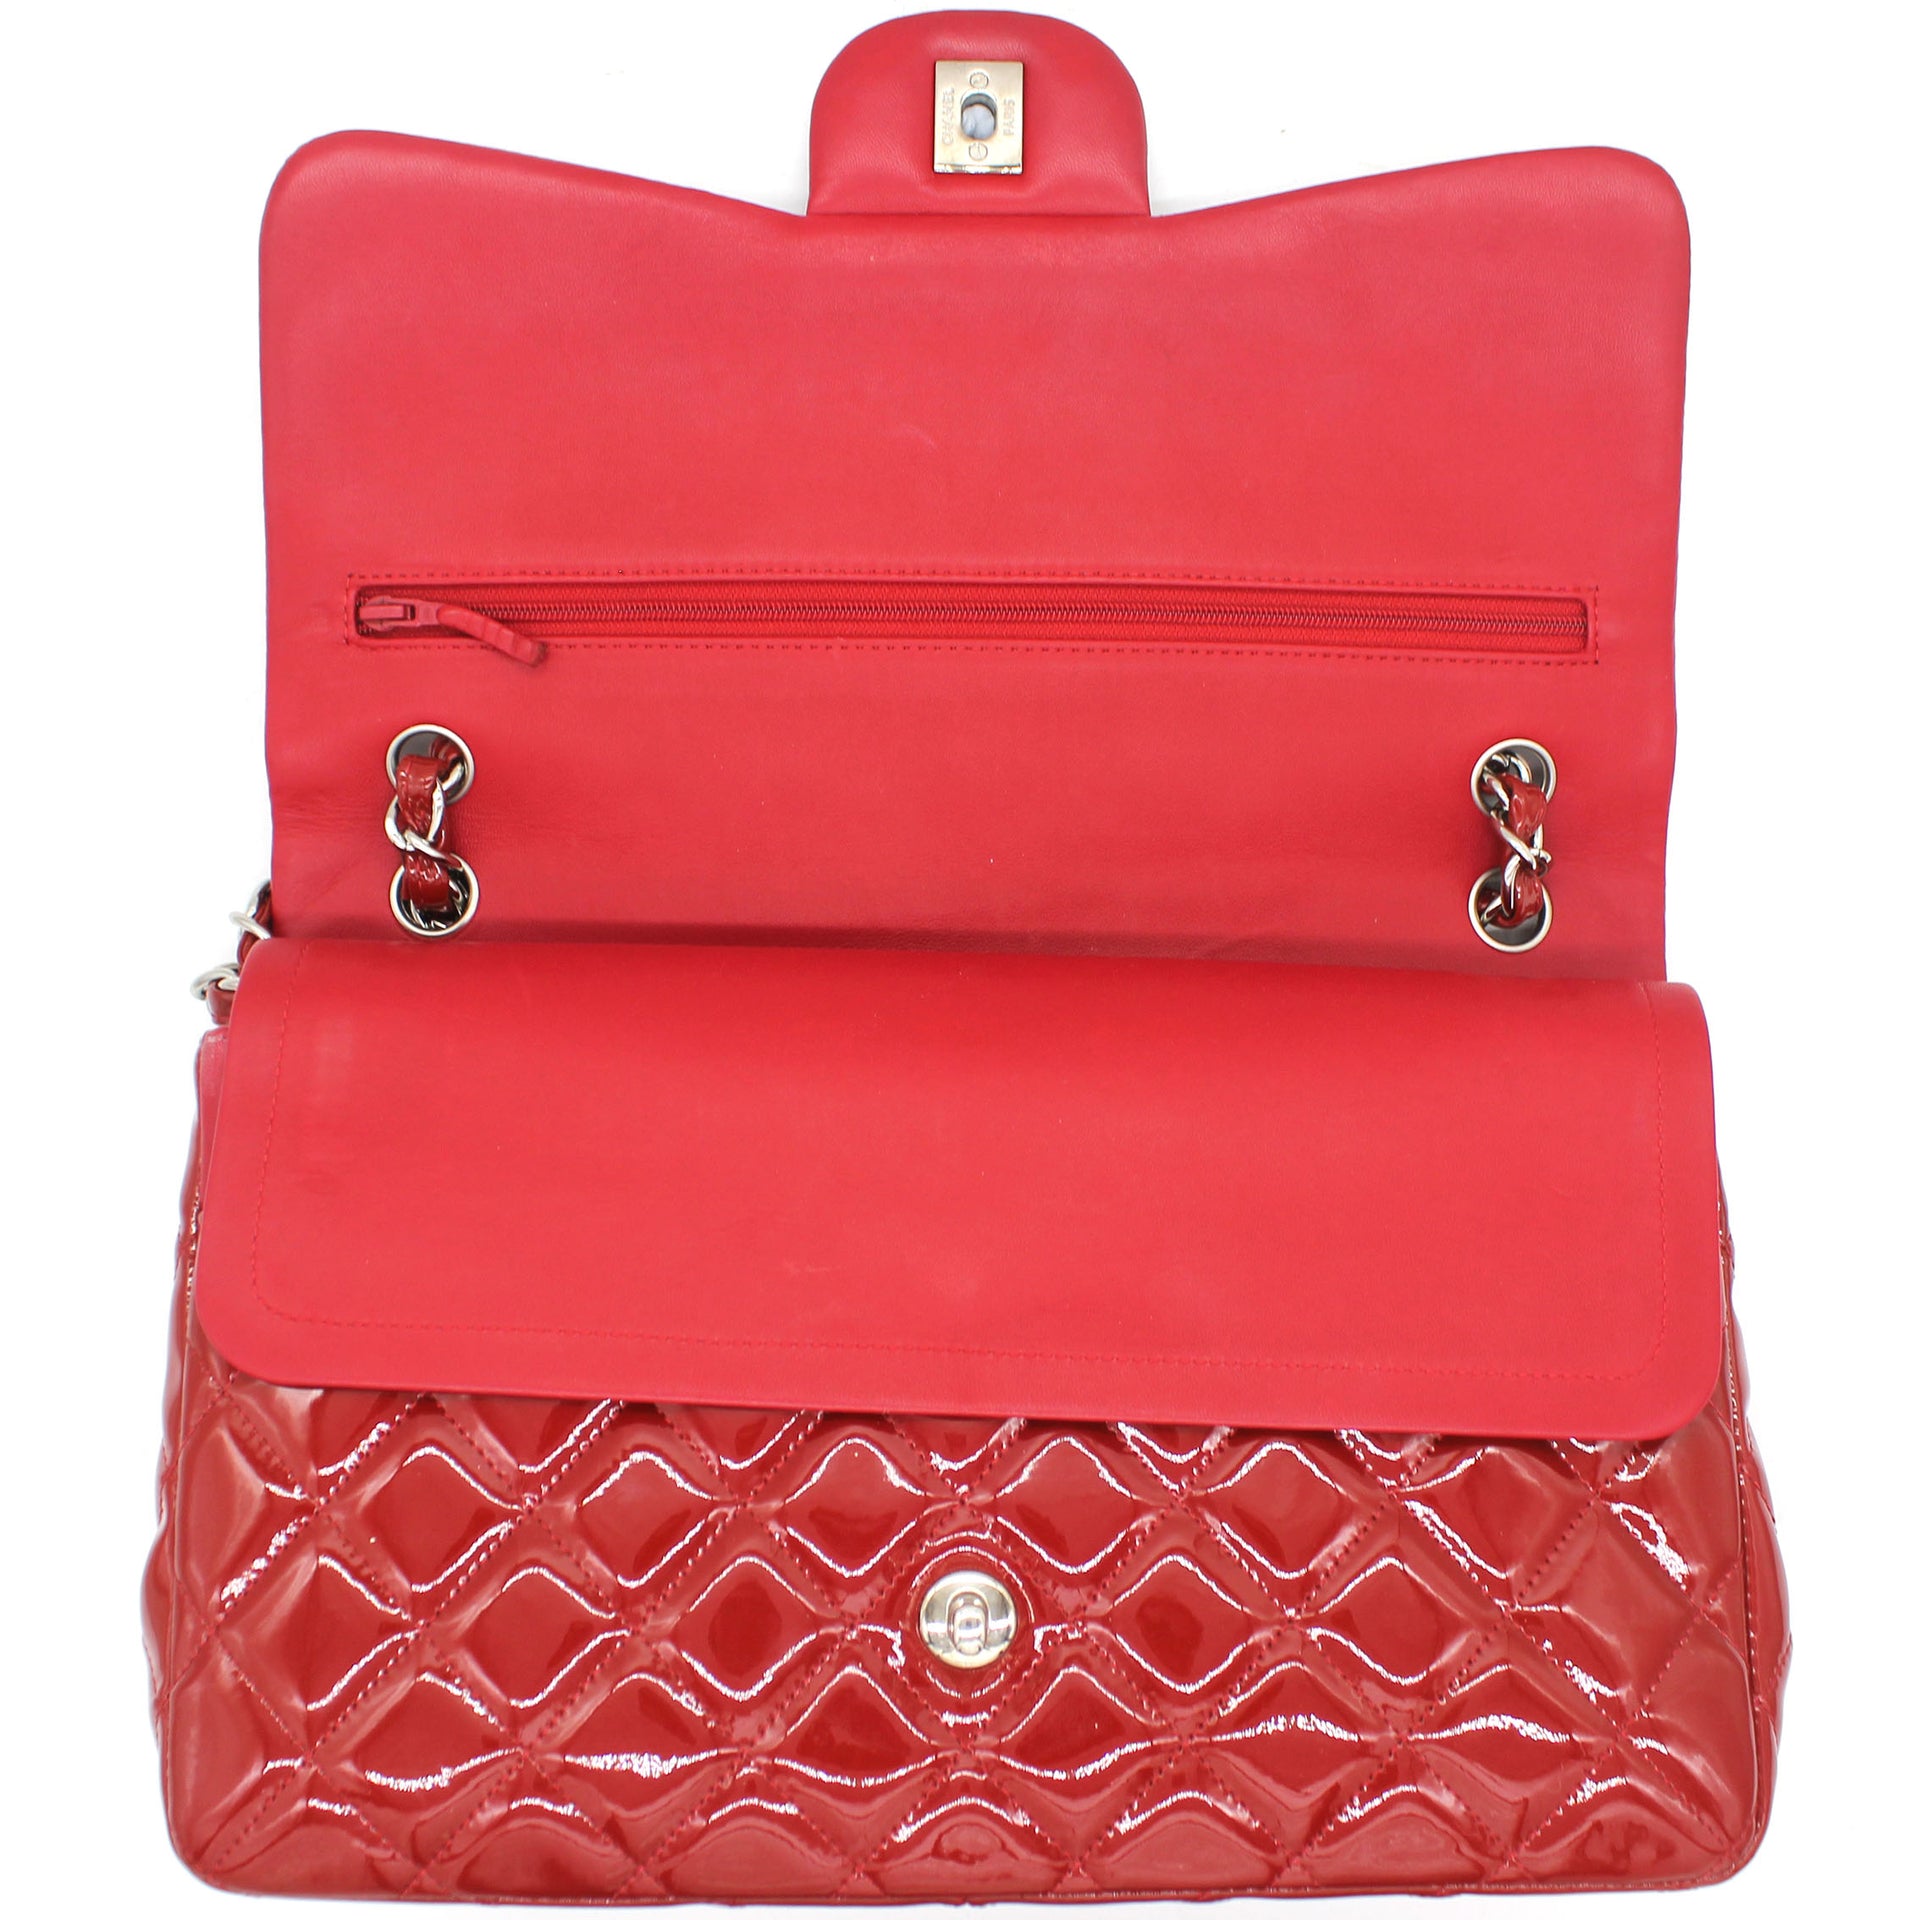 CHANEL Red Chevron Lambskin Leather Jumbo Classic Single Flap Shoulder Bag  | eBay